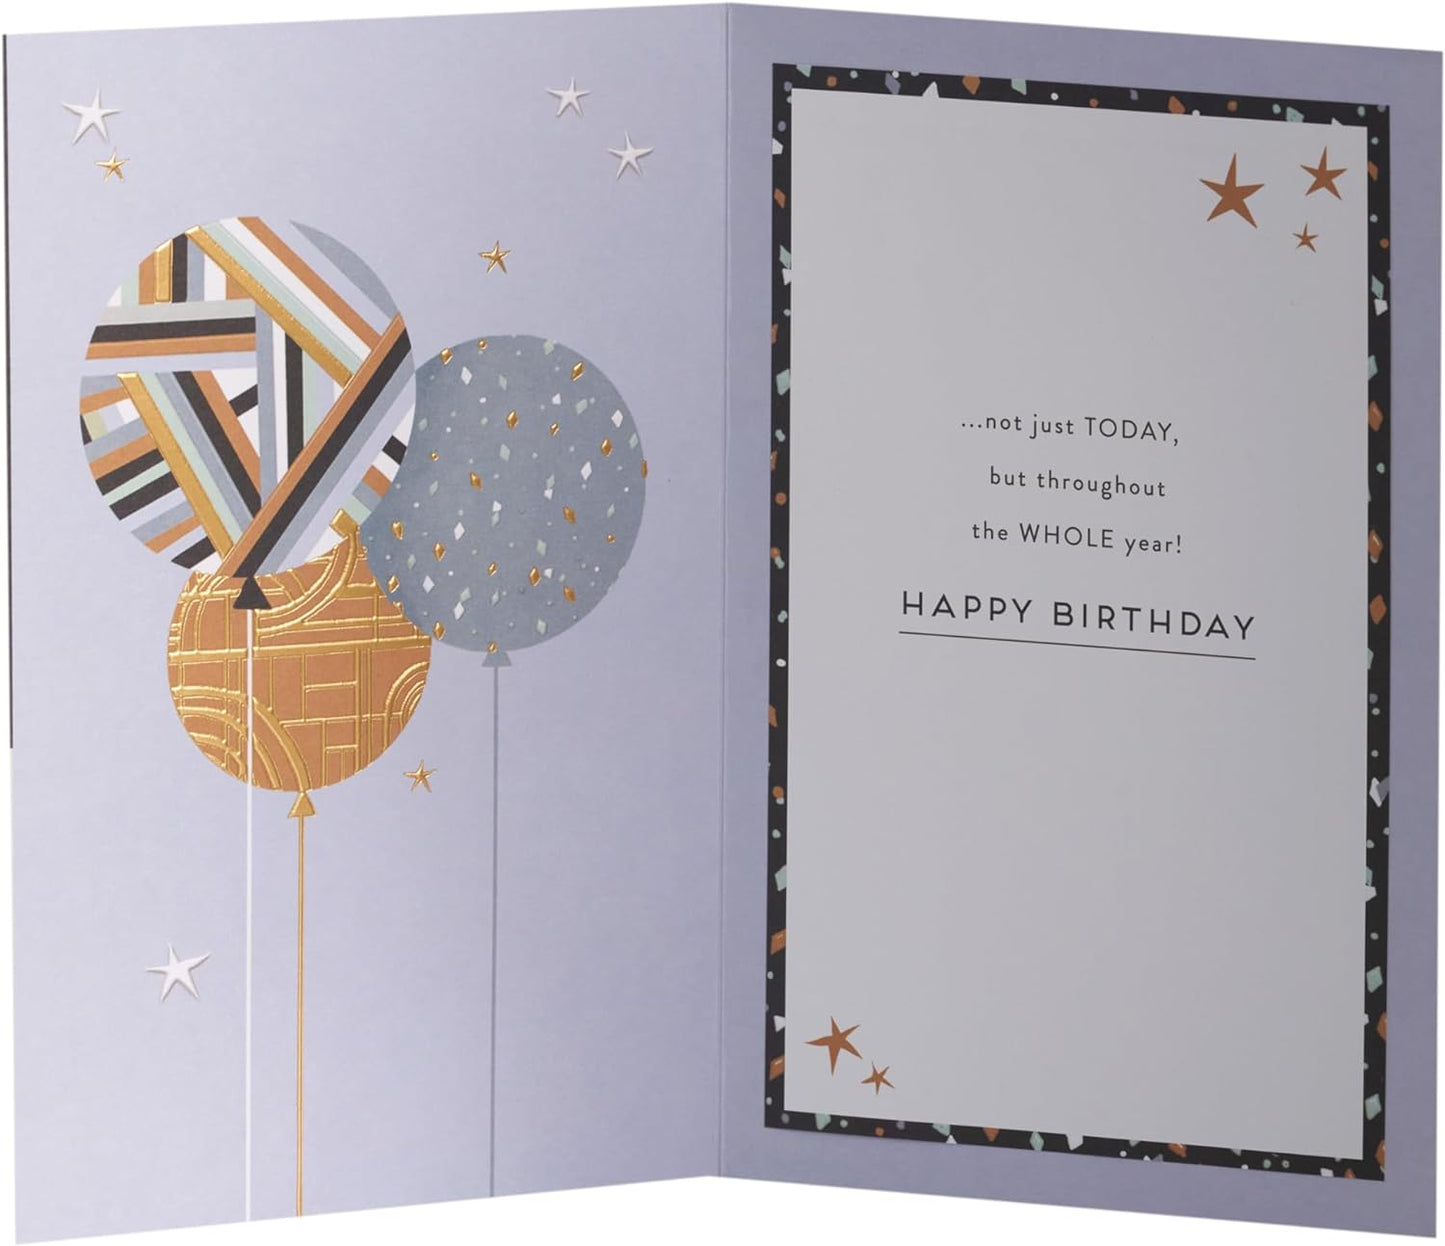 Gold Foil Cake Design Dad Birthday Card